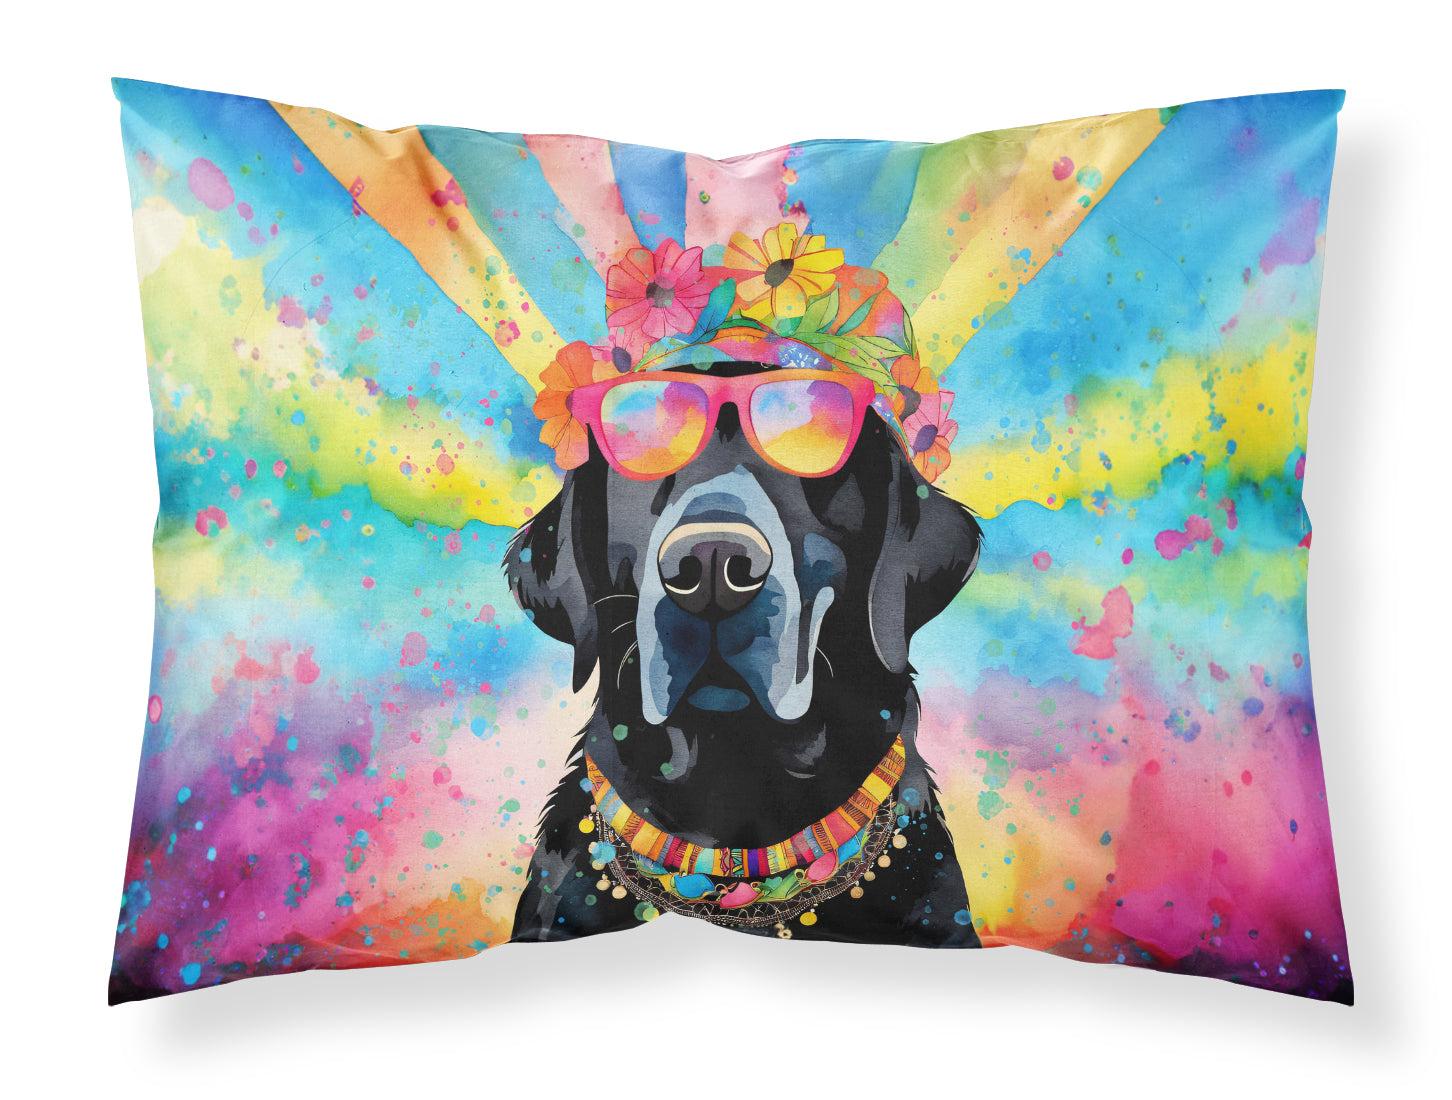 Buy this Black Labrador Hippie Dawg Standard Pillowcase